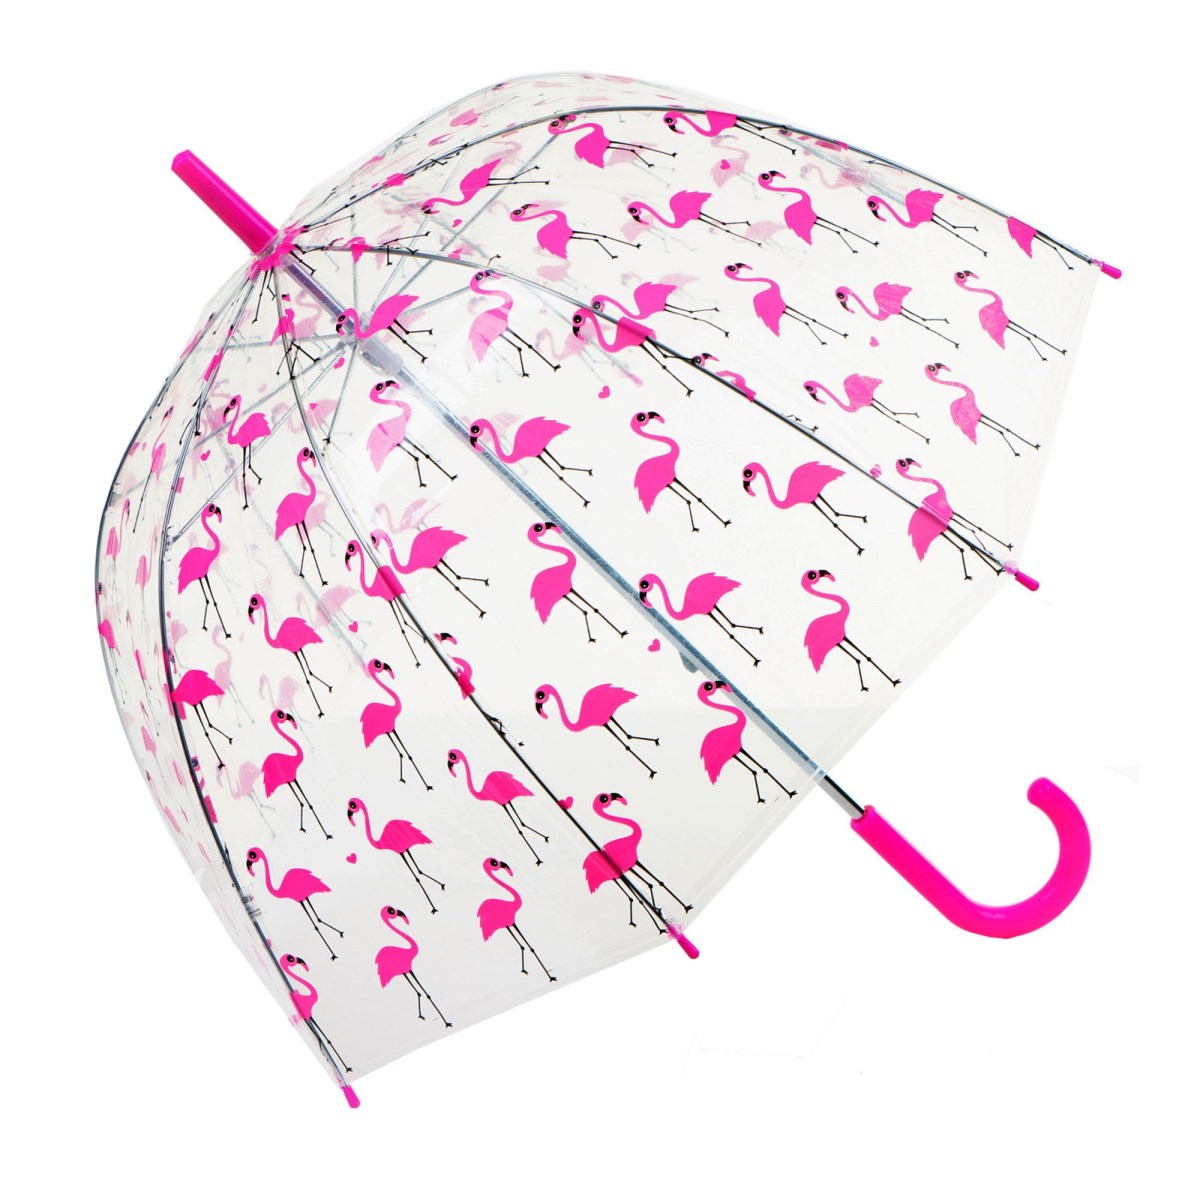 Adult flamingo dome umbrella wholesale (